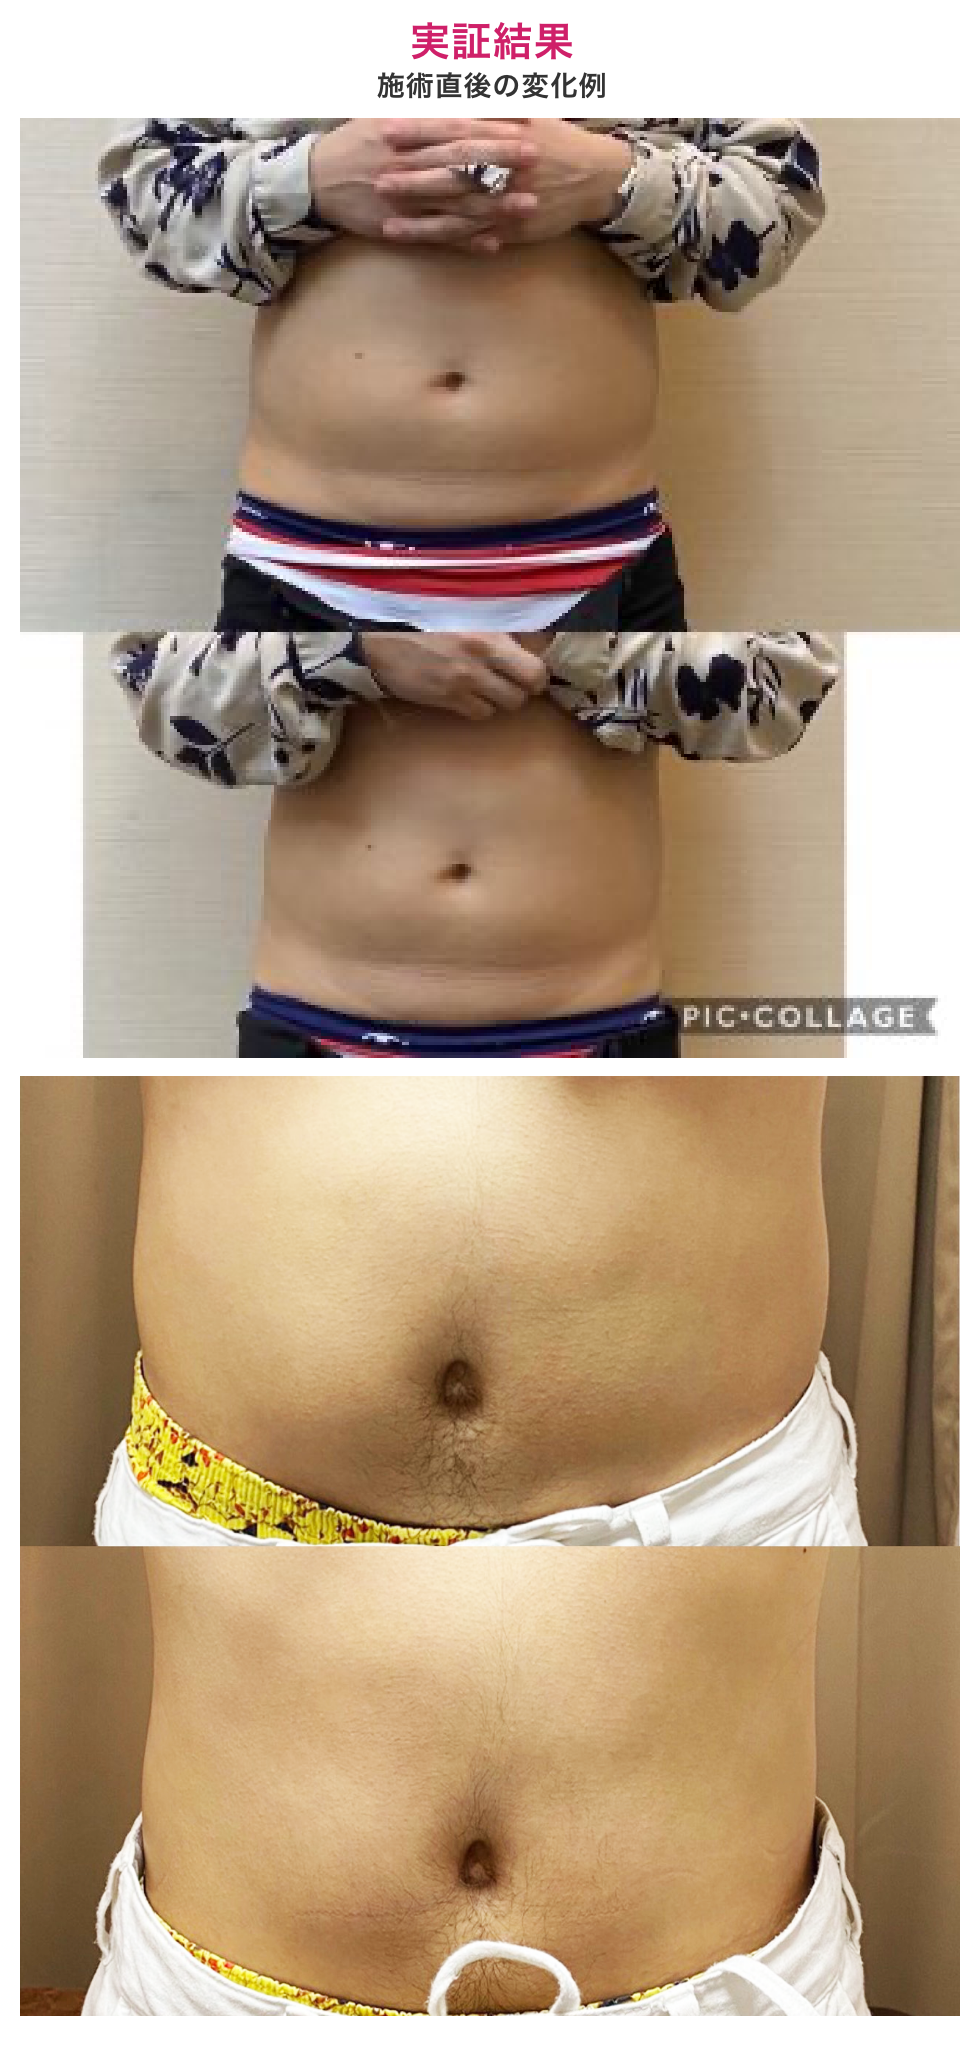 実証結果：施術直後の変化例腹部の比較写真